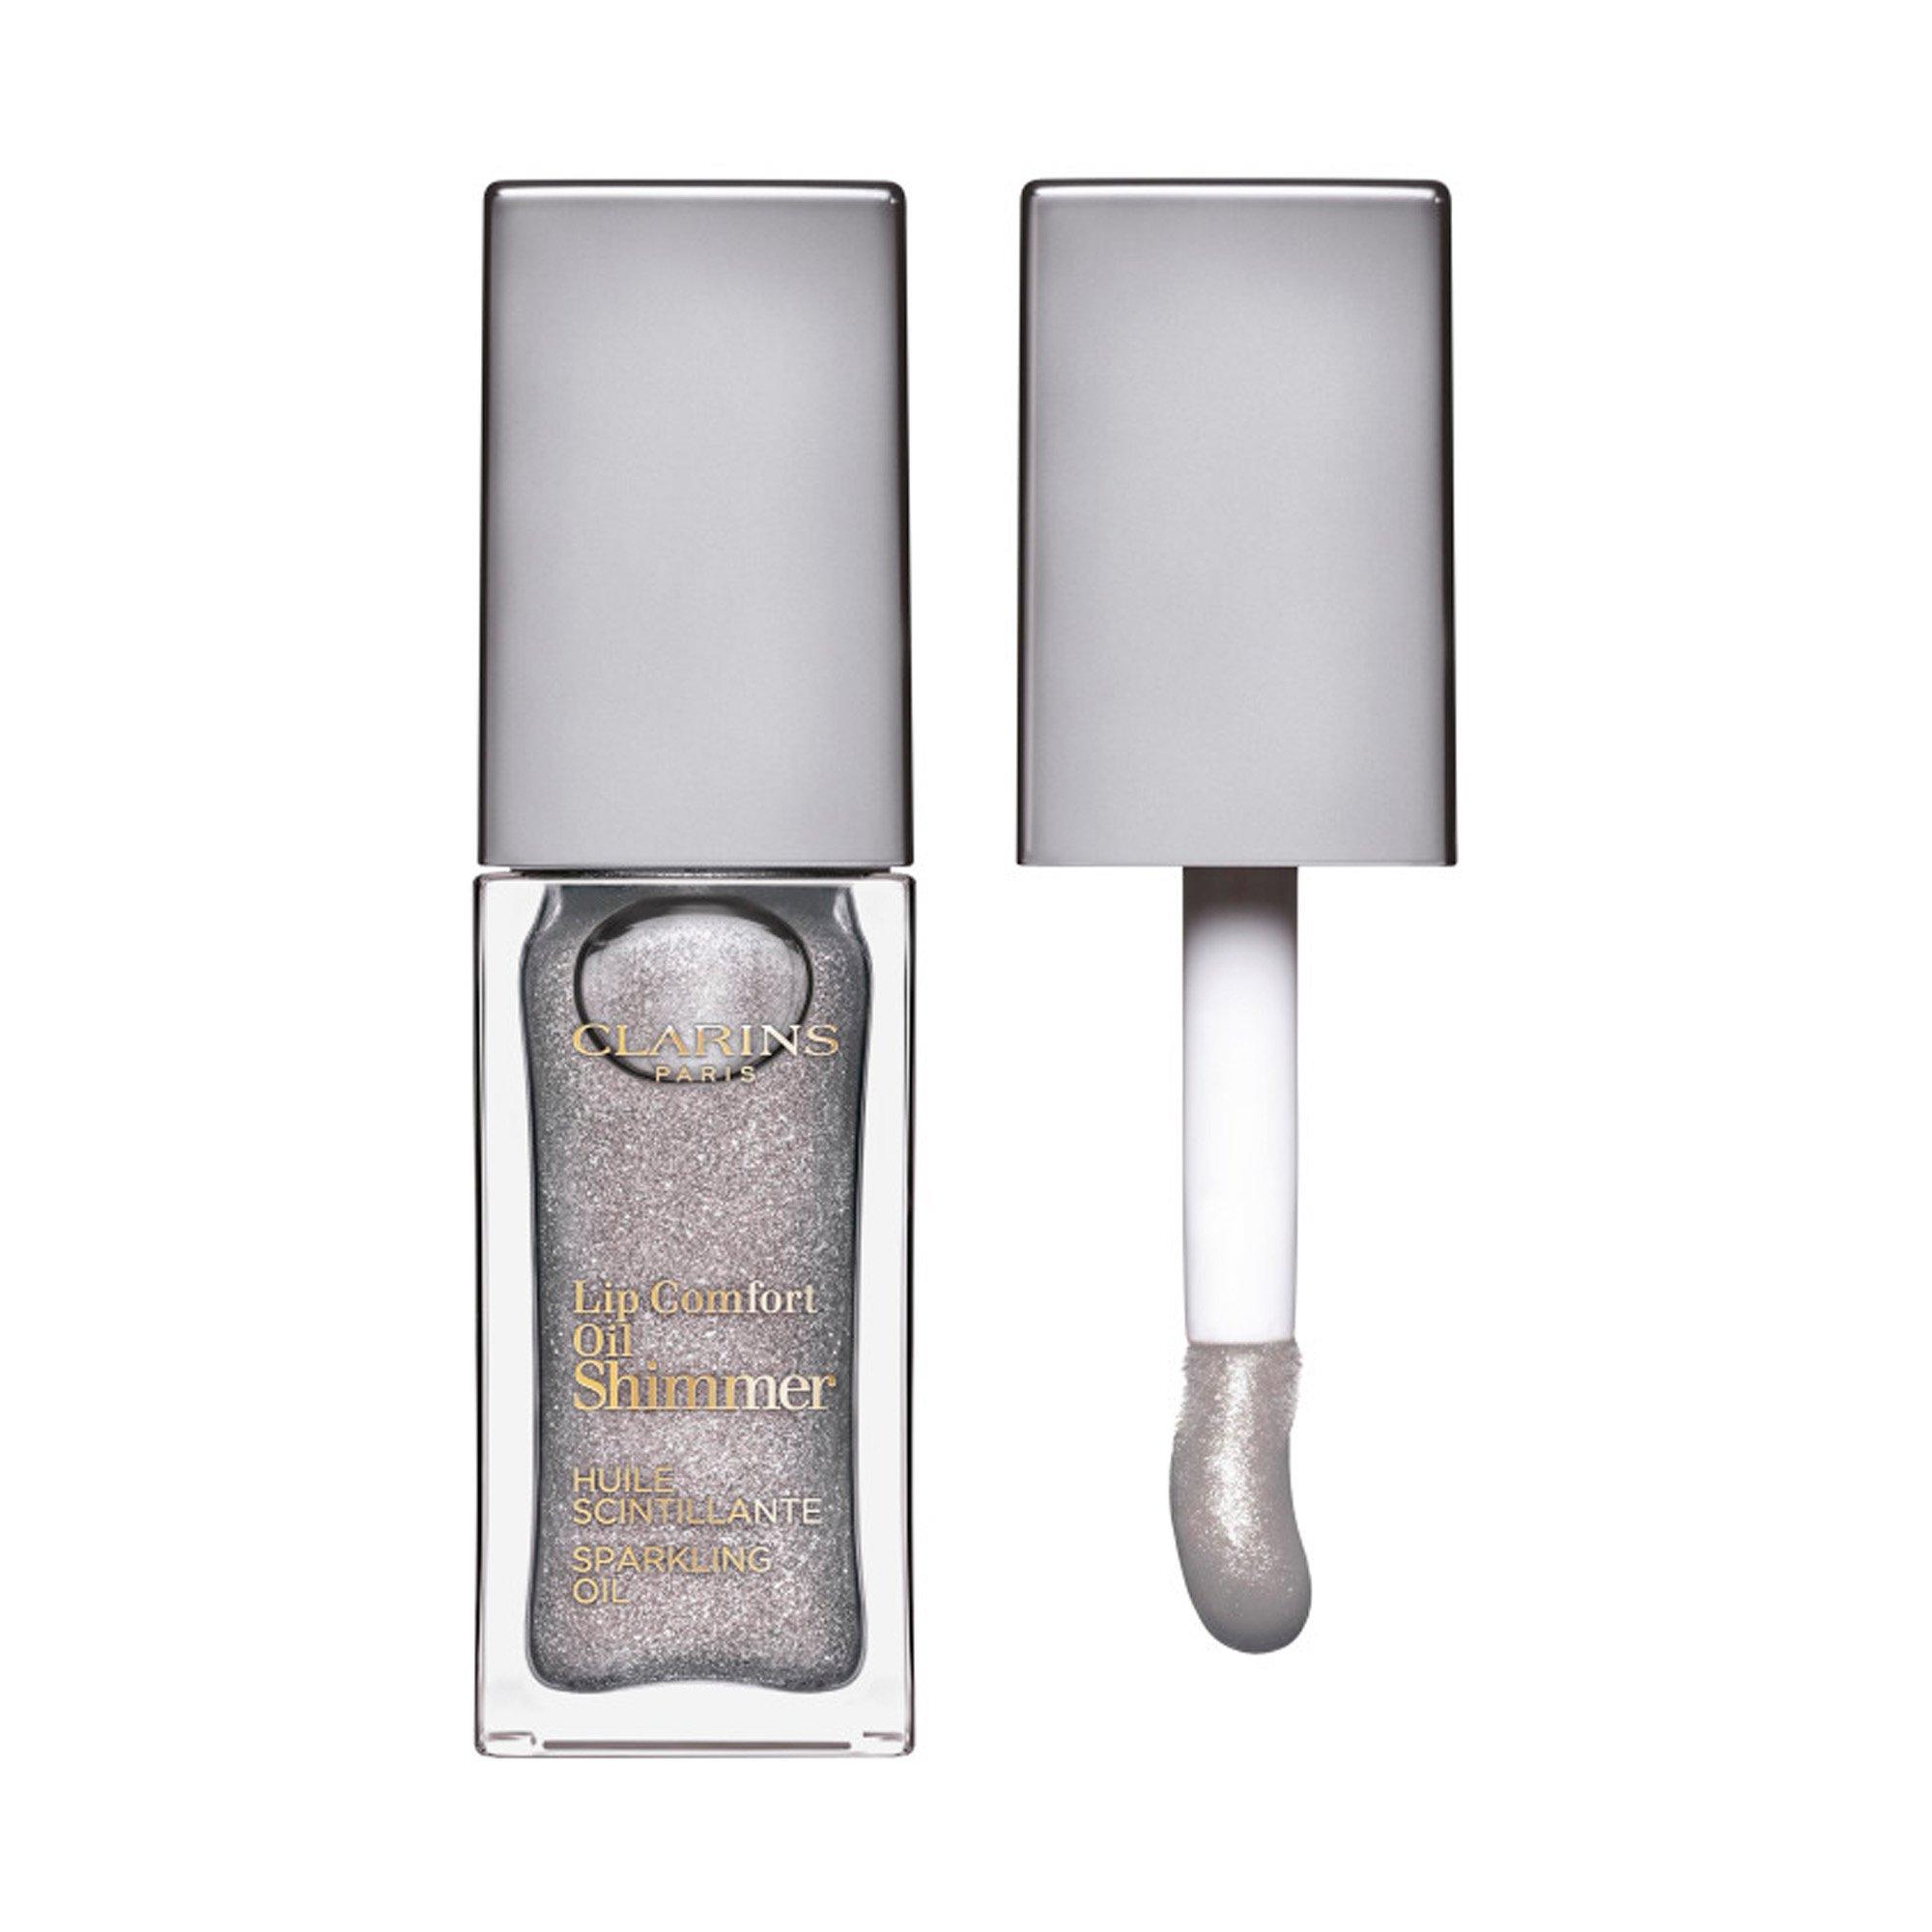 Image of CLARINS LIP COMFORT OIL SHIMMER Lip Comfort Oil Shimmer